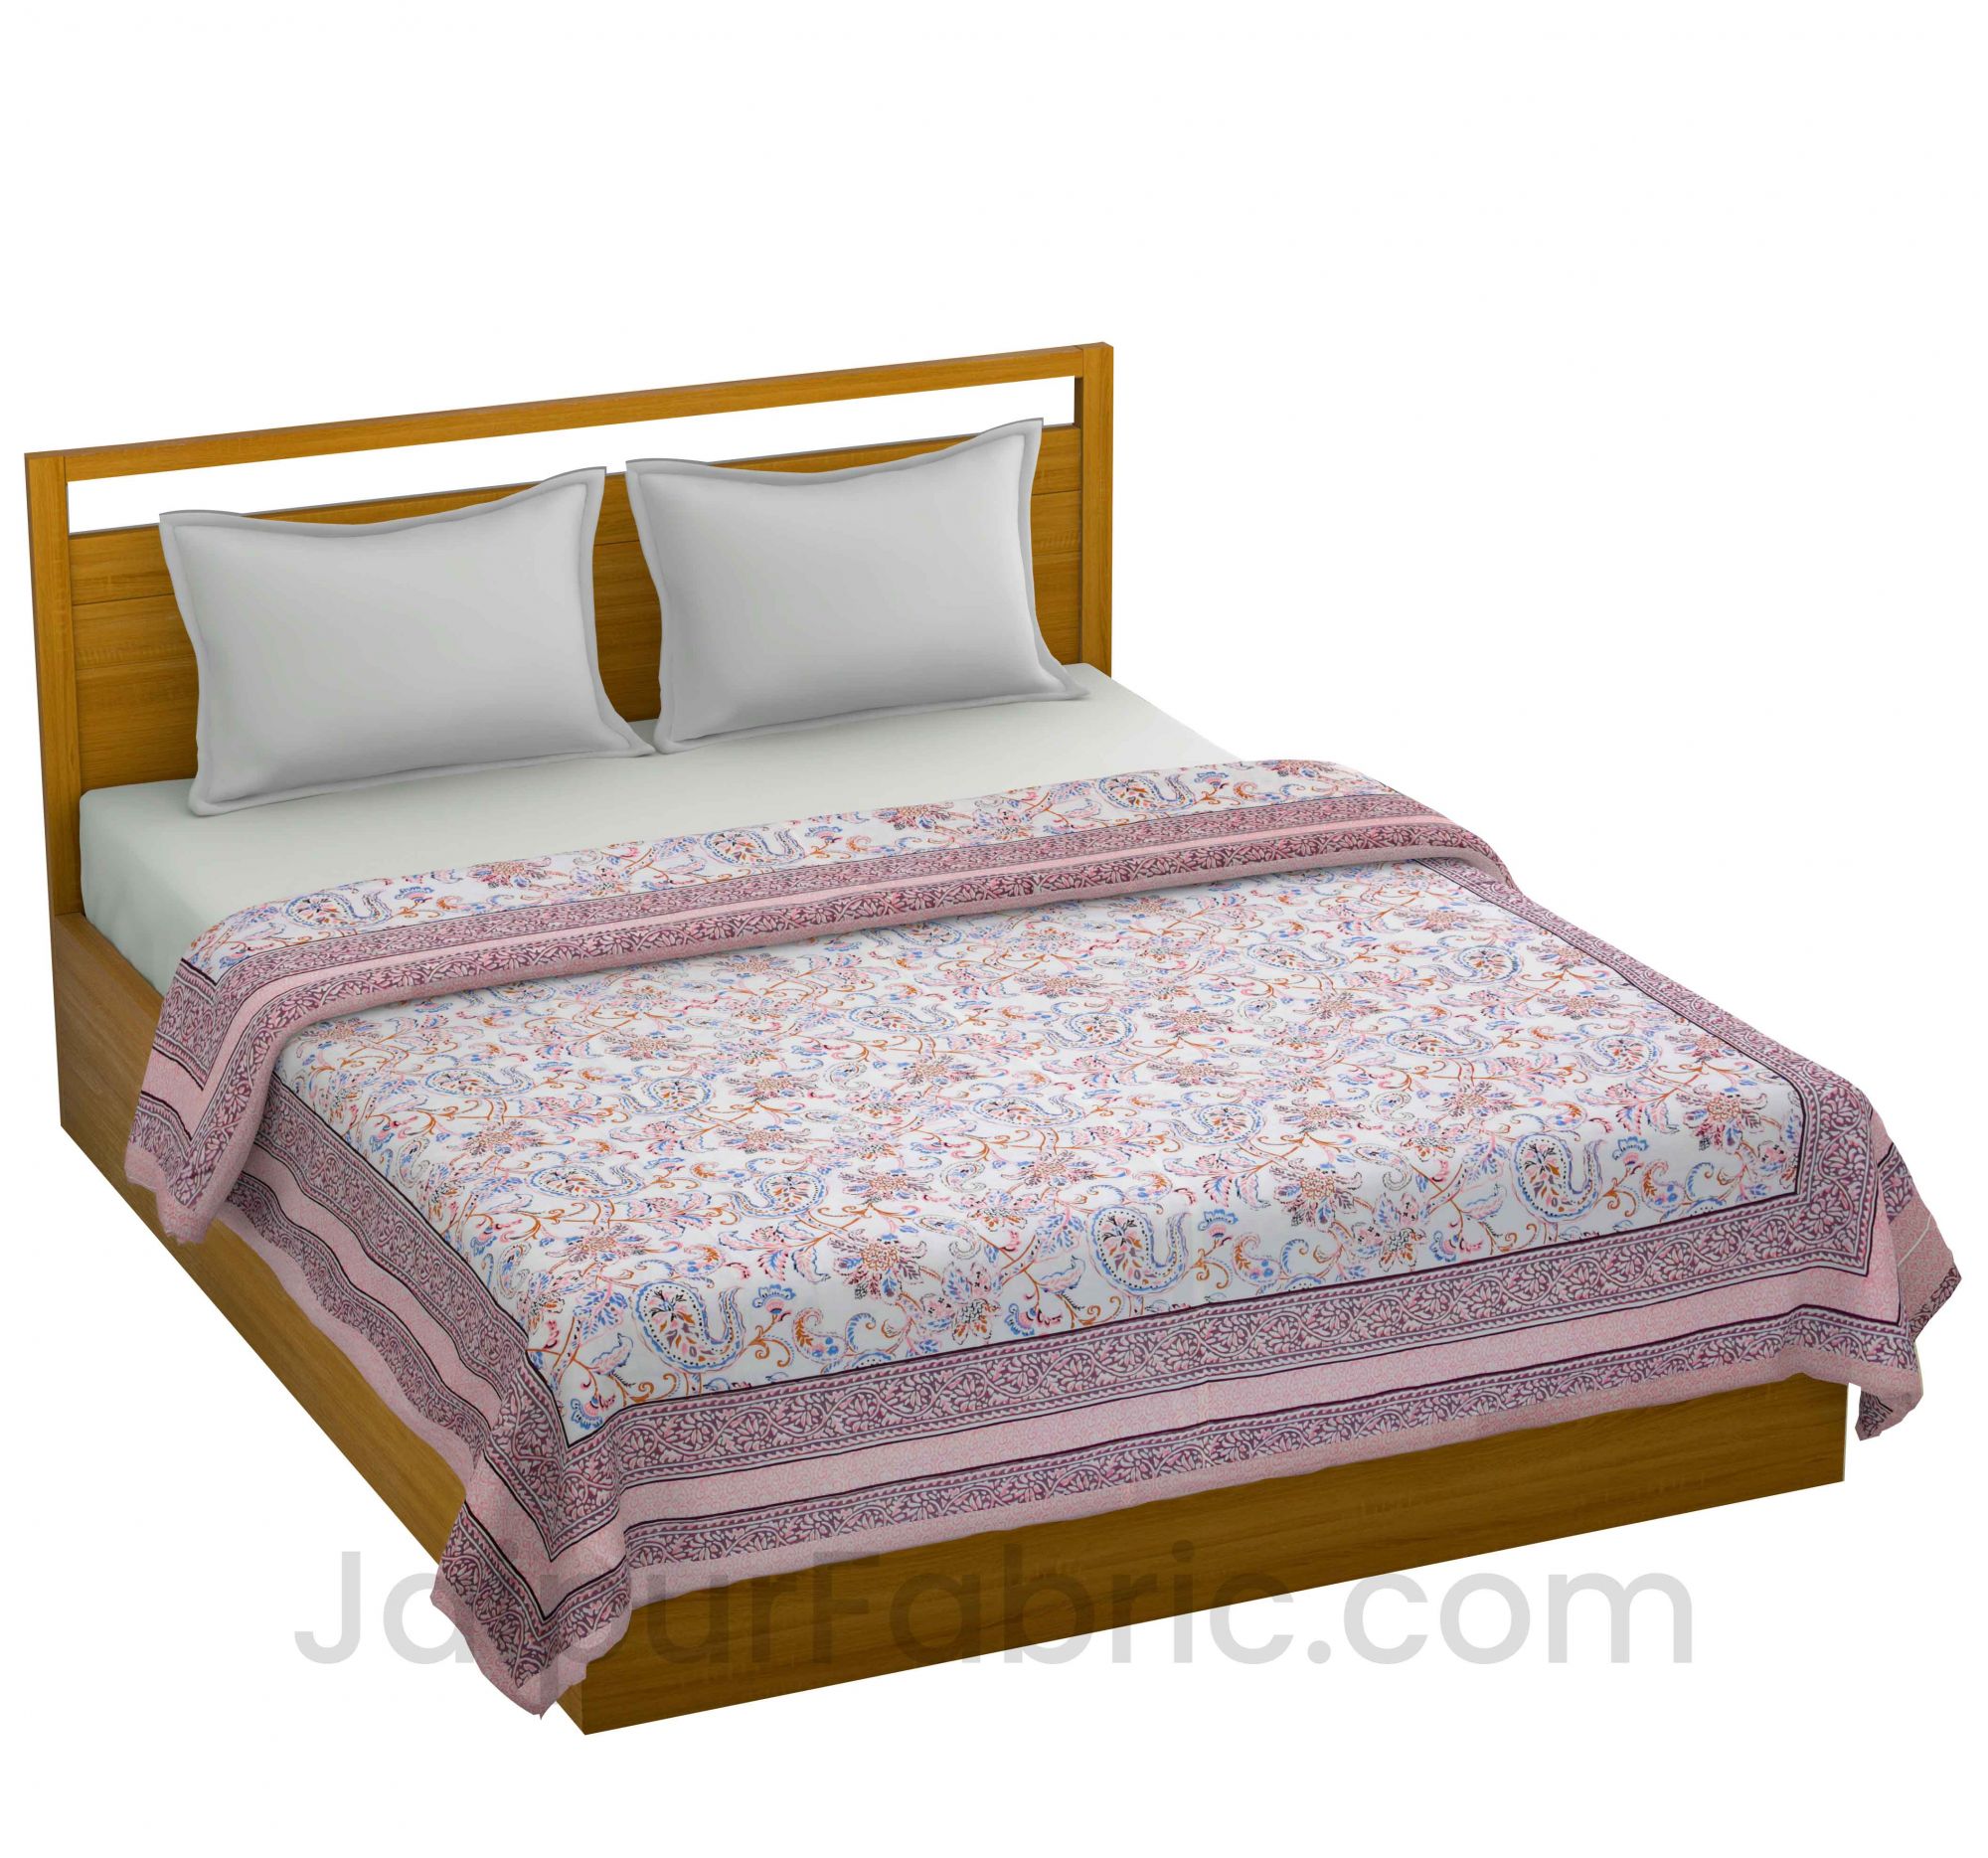 Mulmul Pure Cotton Paisley Floral Ethnic Pink Border Jaipuri Double Bed Dohar